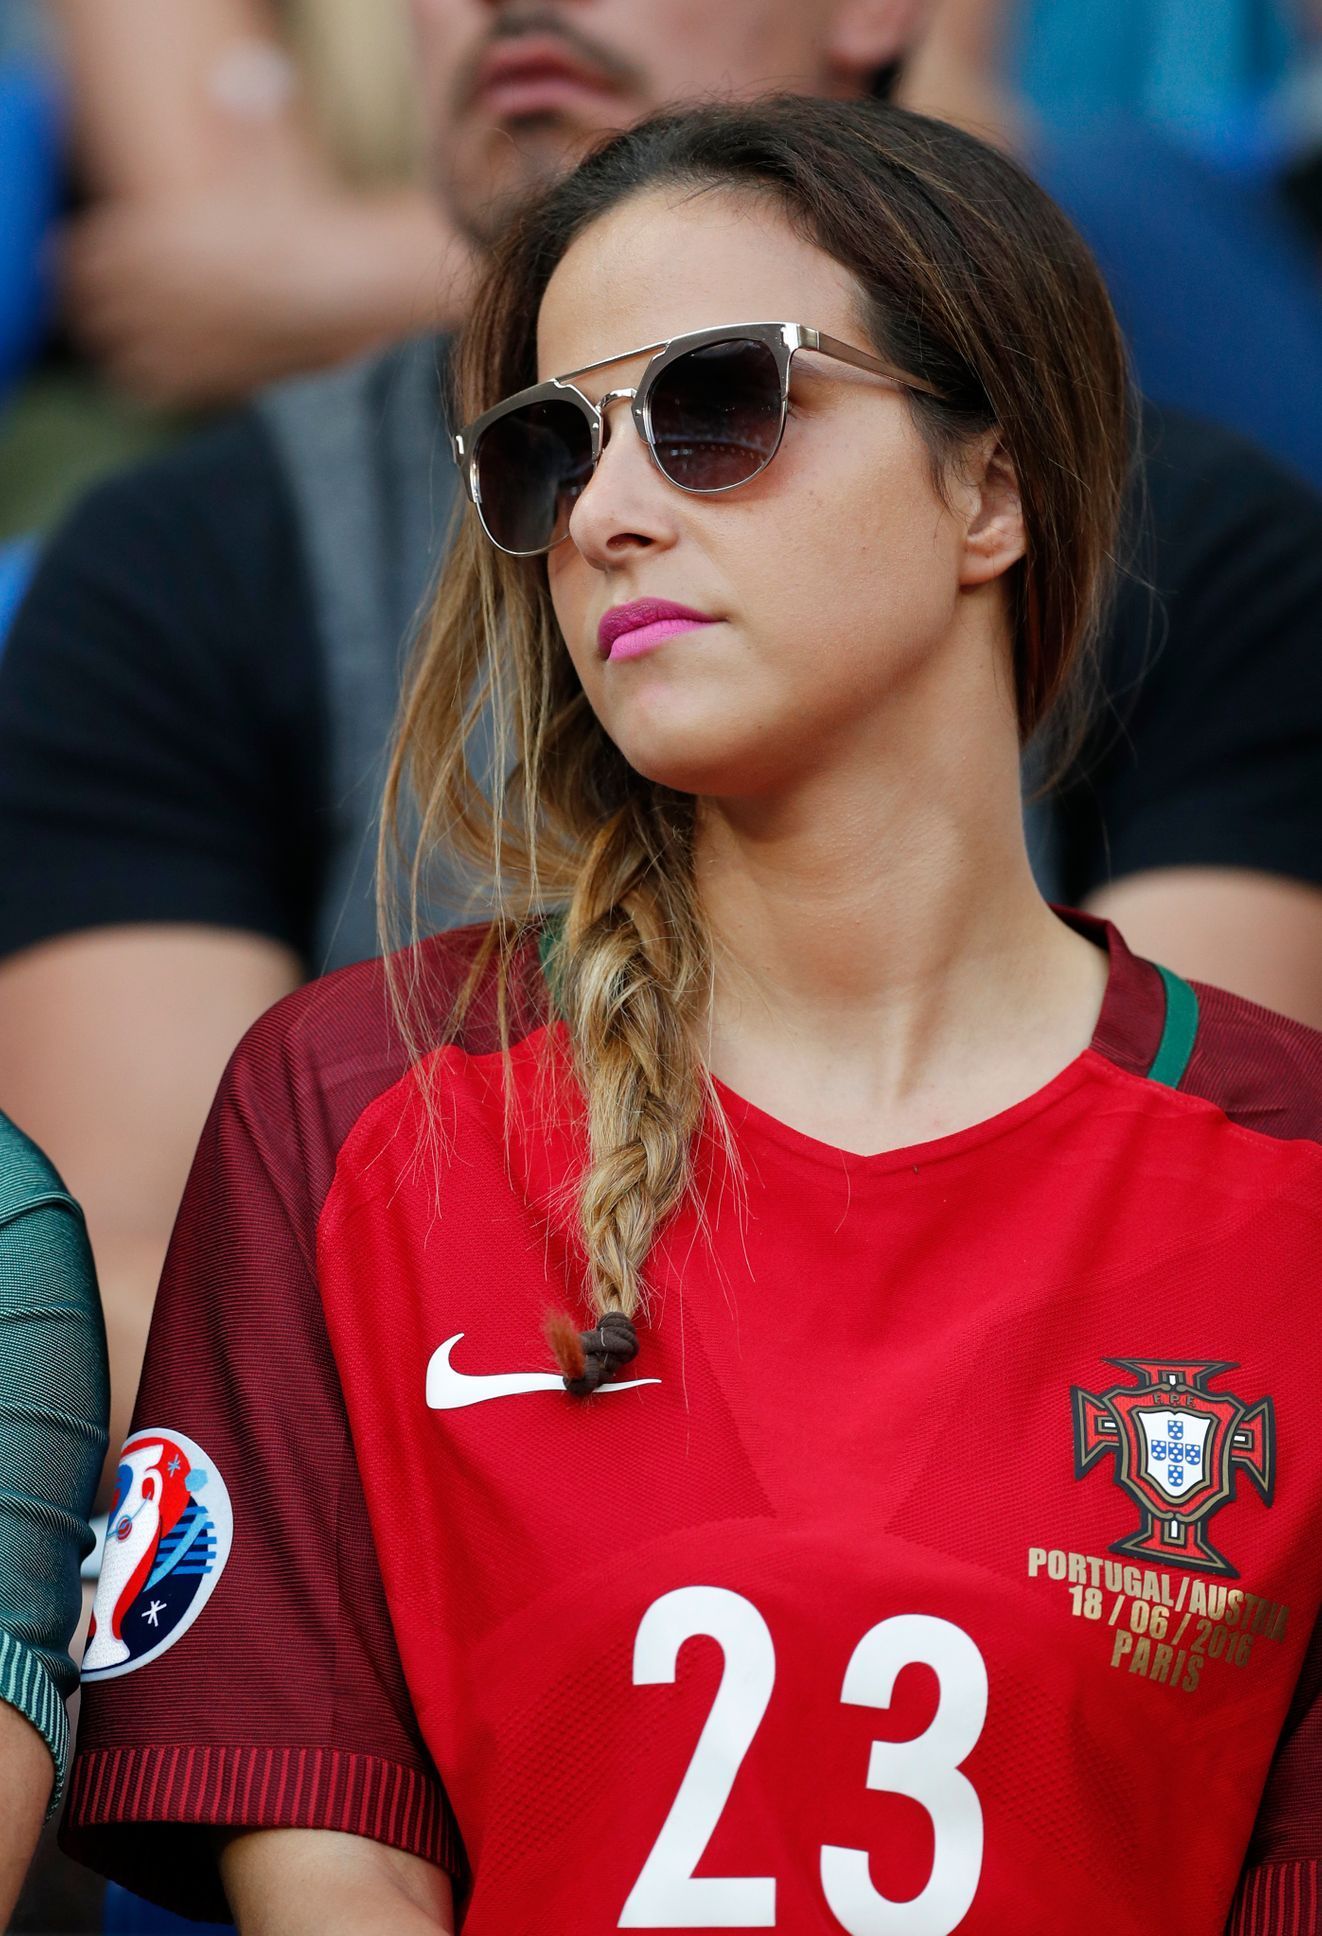 Euro 2016, Portugalsko-Wales: portugalská fanynka